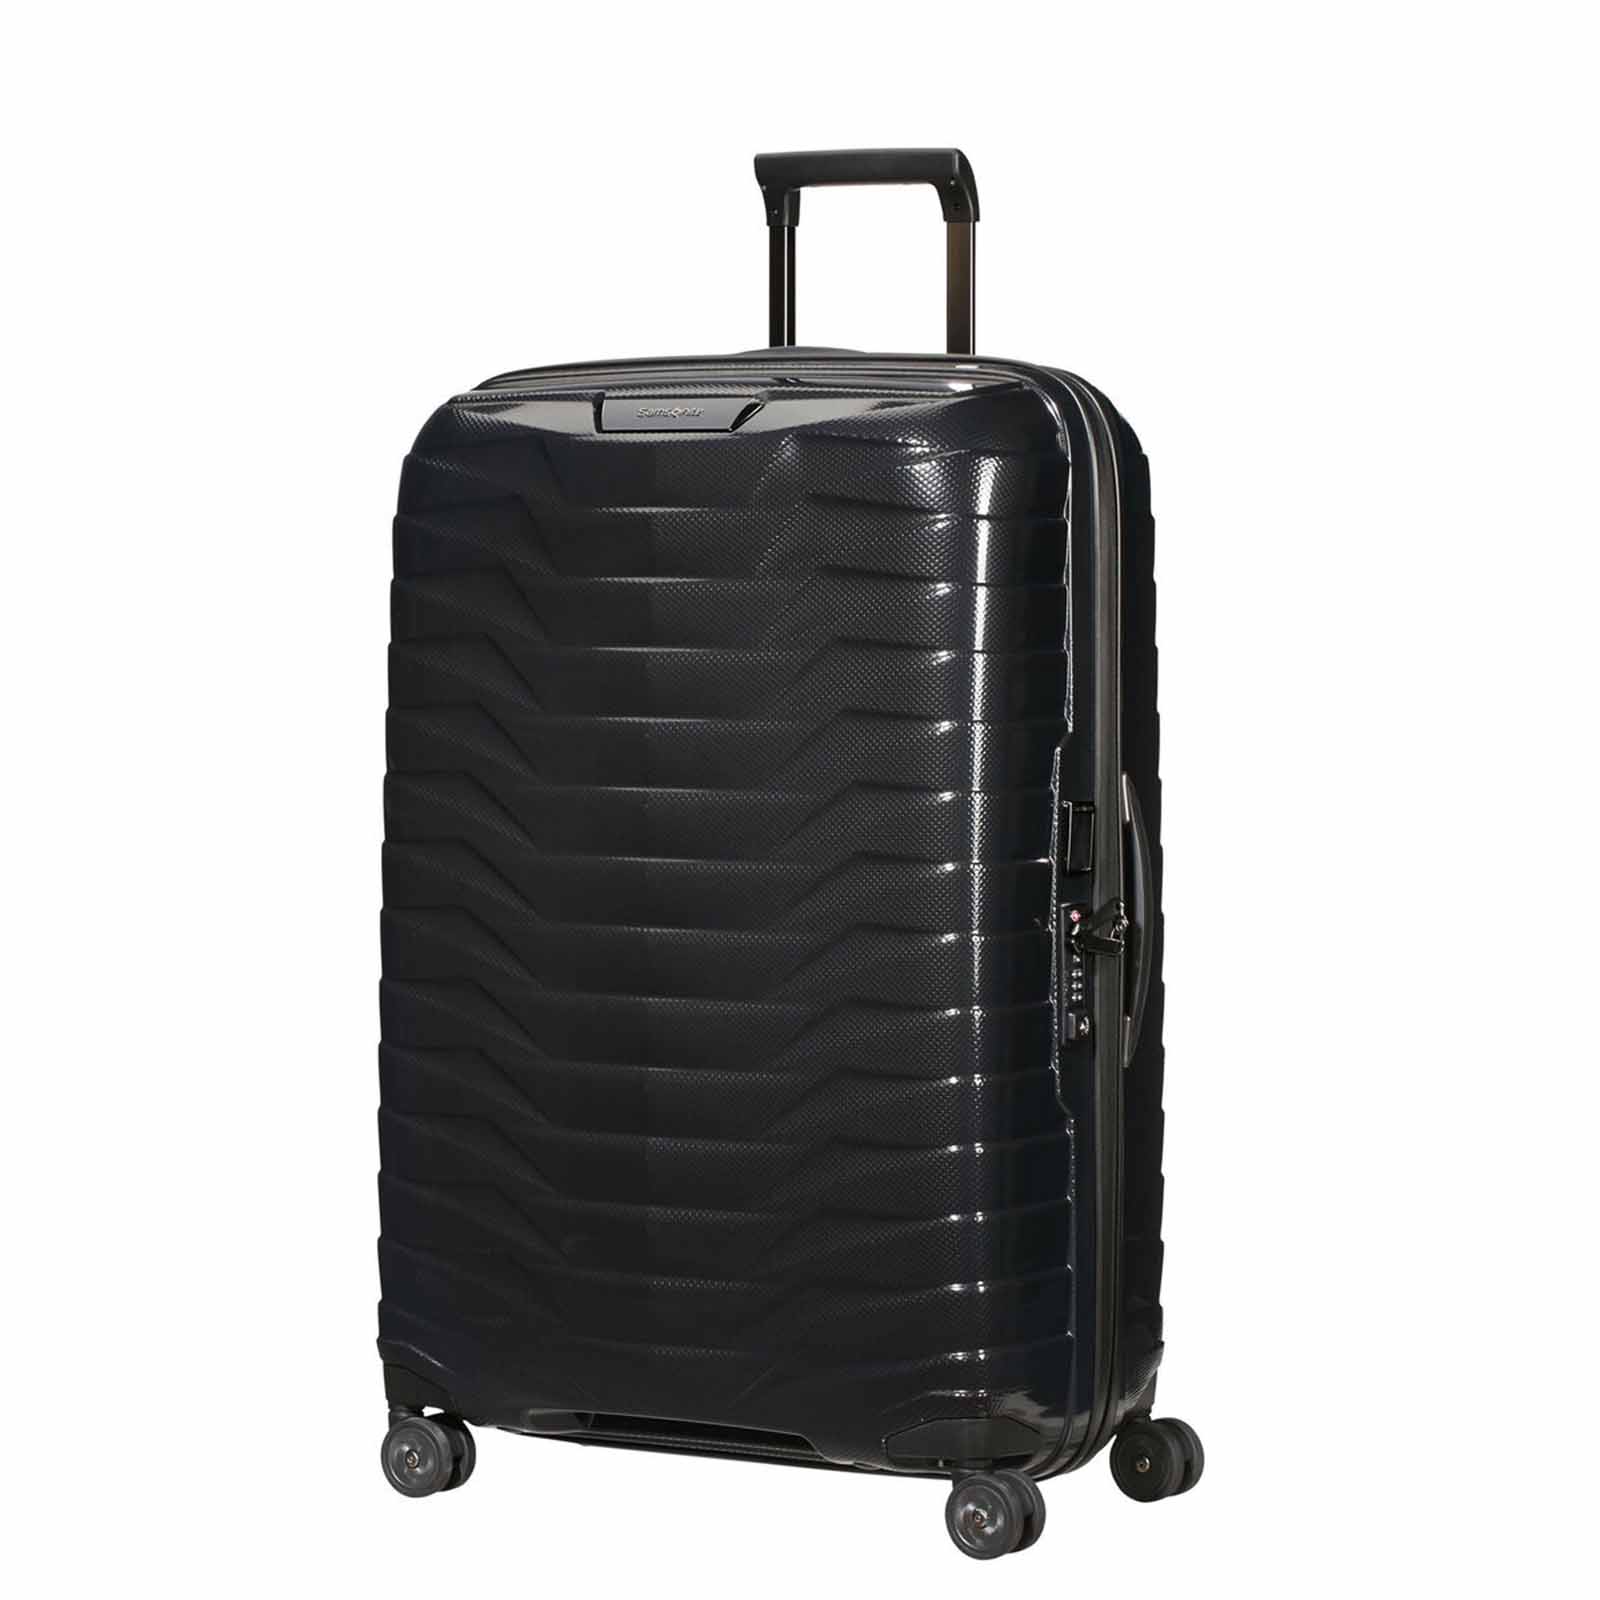 Samsonite-Proxis-75cm-Suitcase-Black-Front-Angle